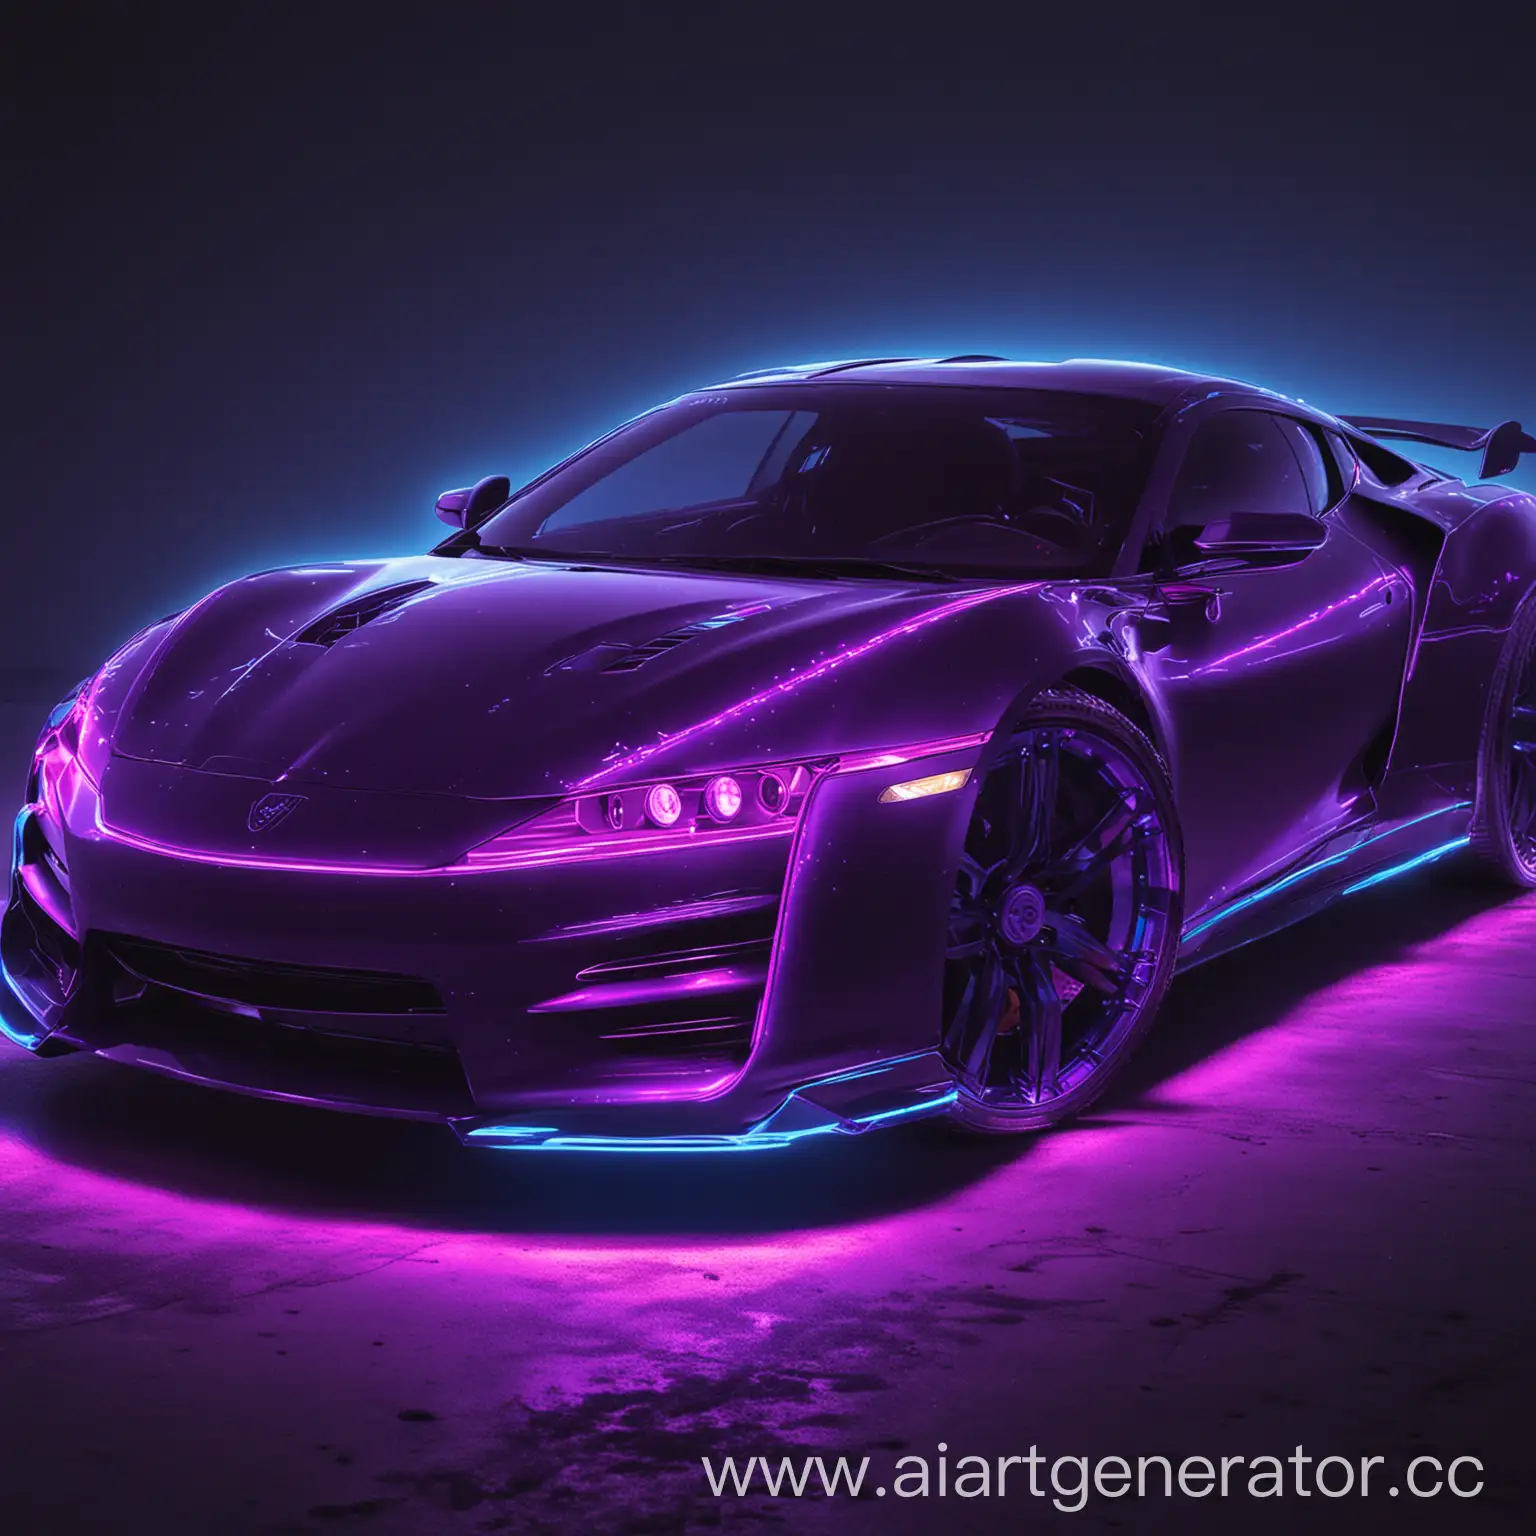 Futuristic-Neon-Sports-Car-Glowing-in-PurpleBlue-Hue